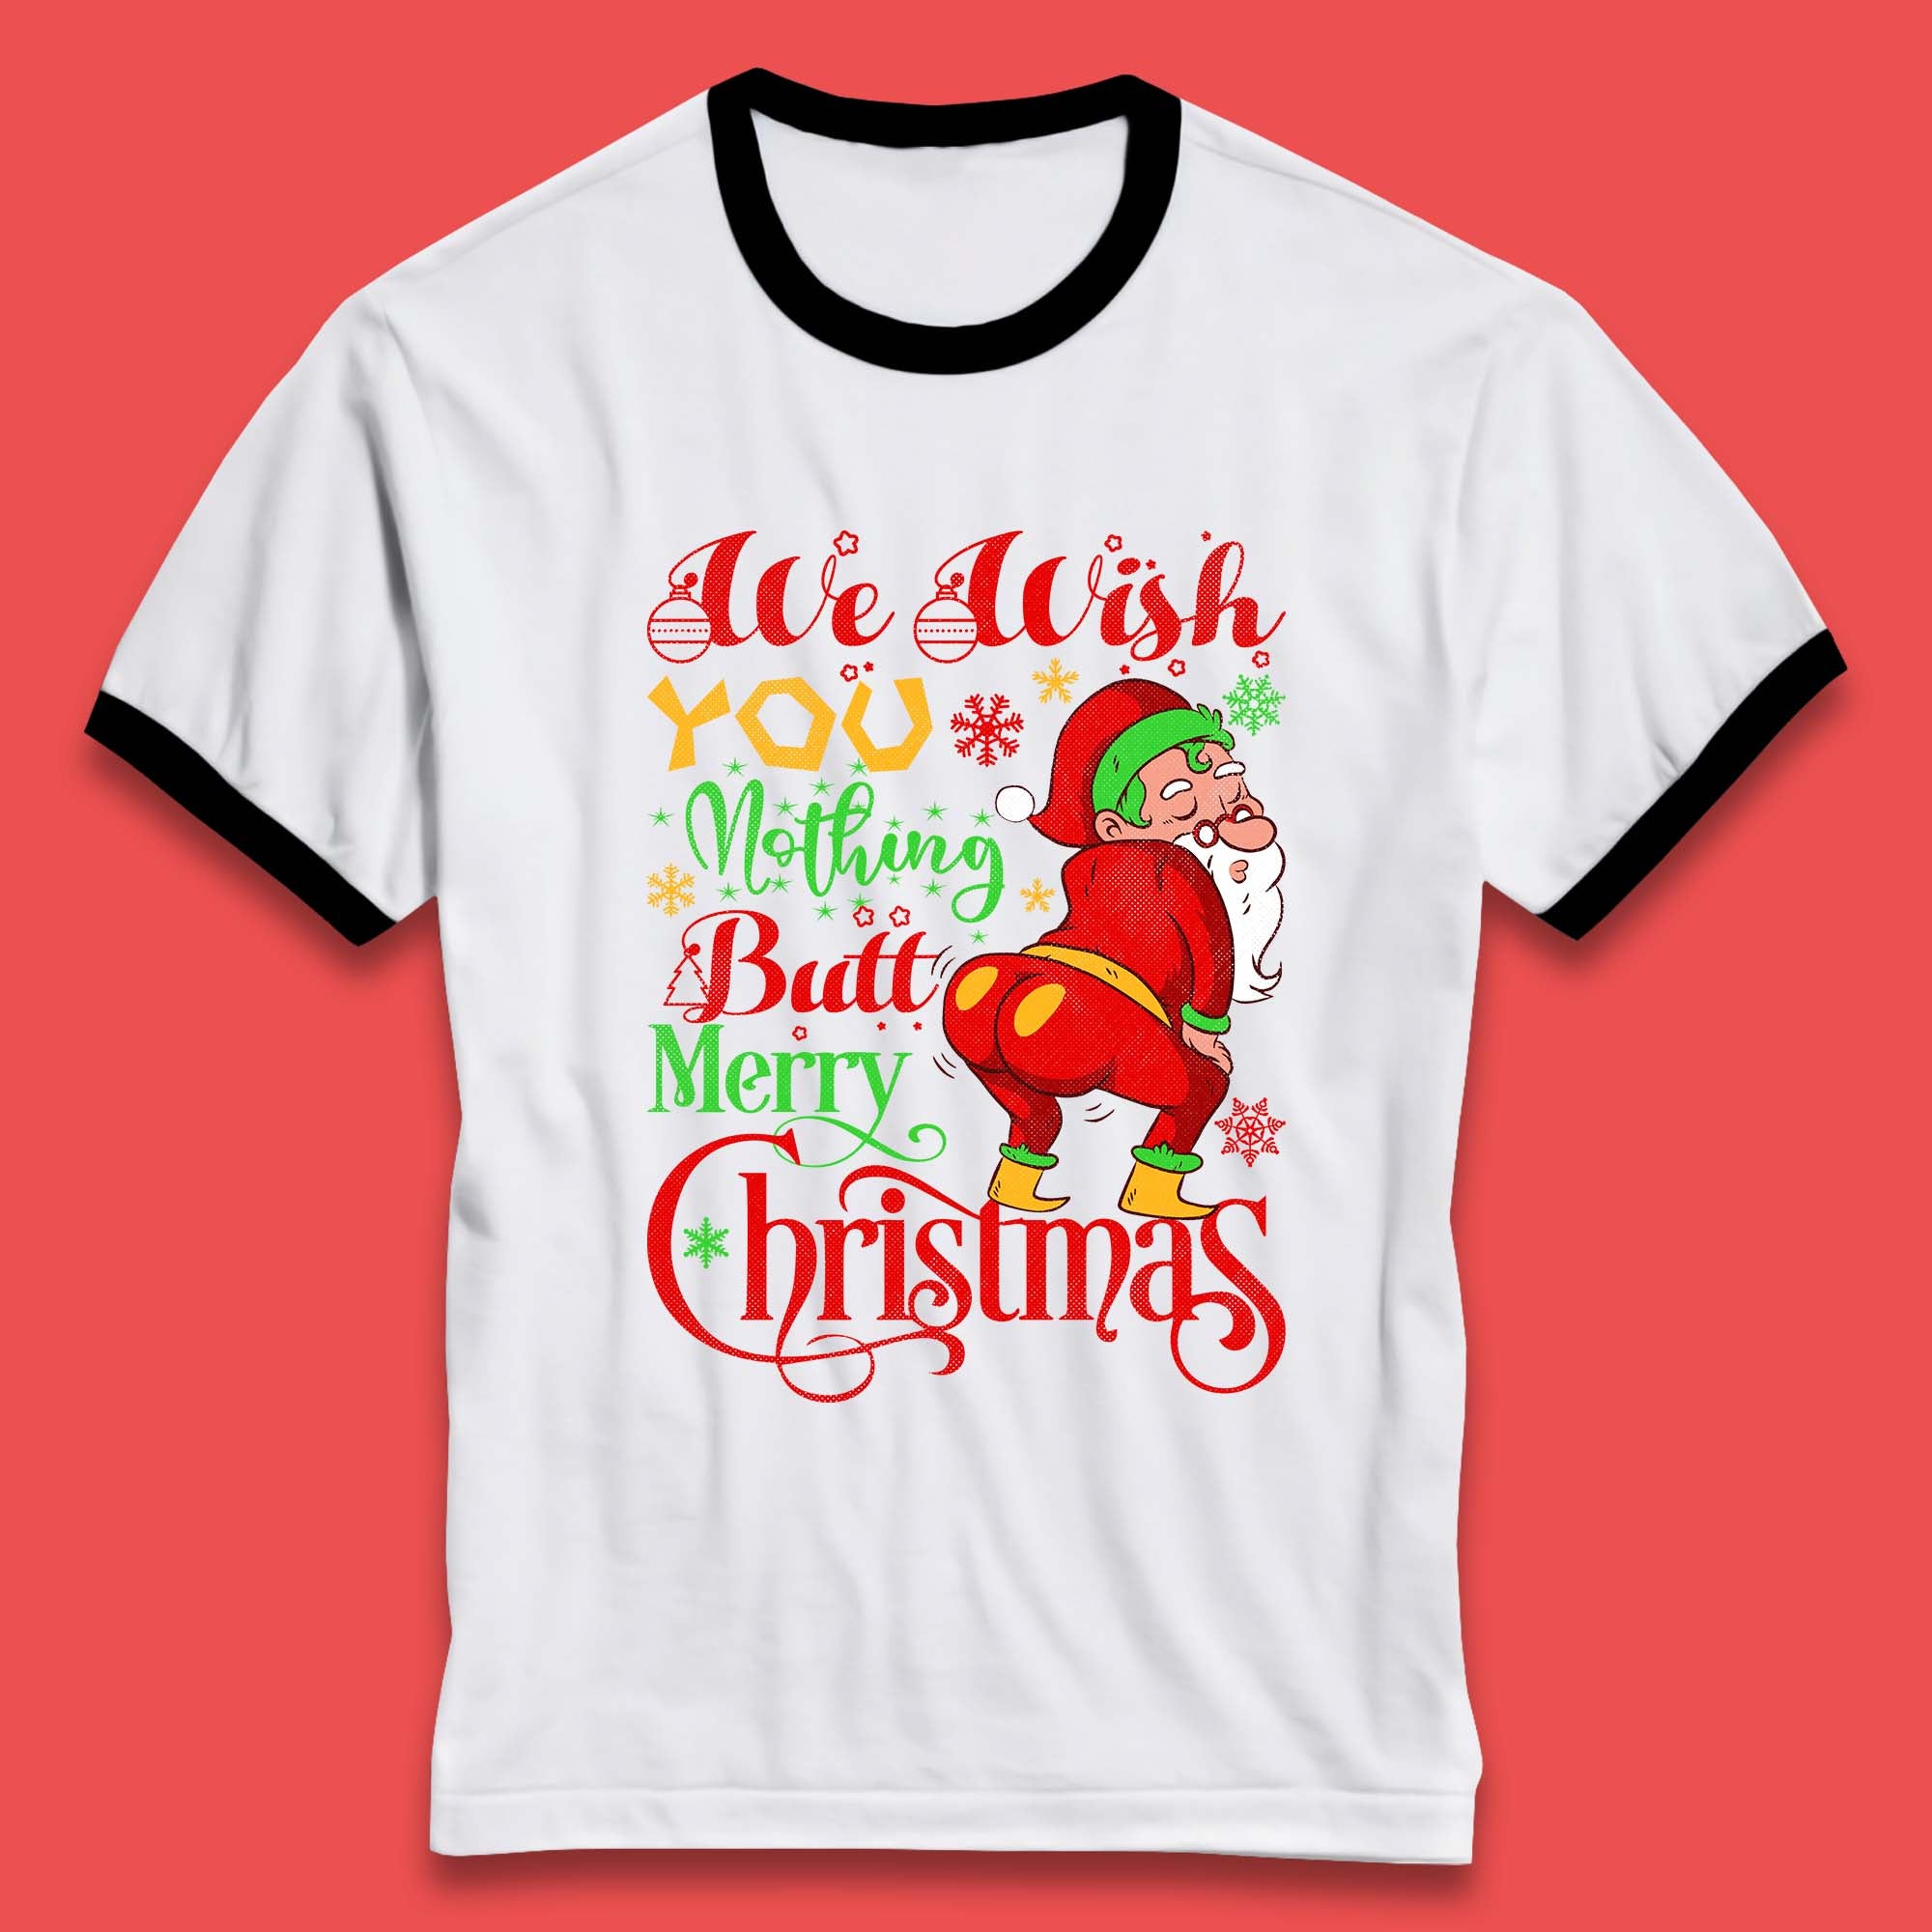 We Wish You Nothing Butt Merry Christmas Funny Naughty Santa Claus Xmas Ringer T Shirt